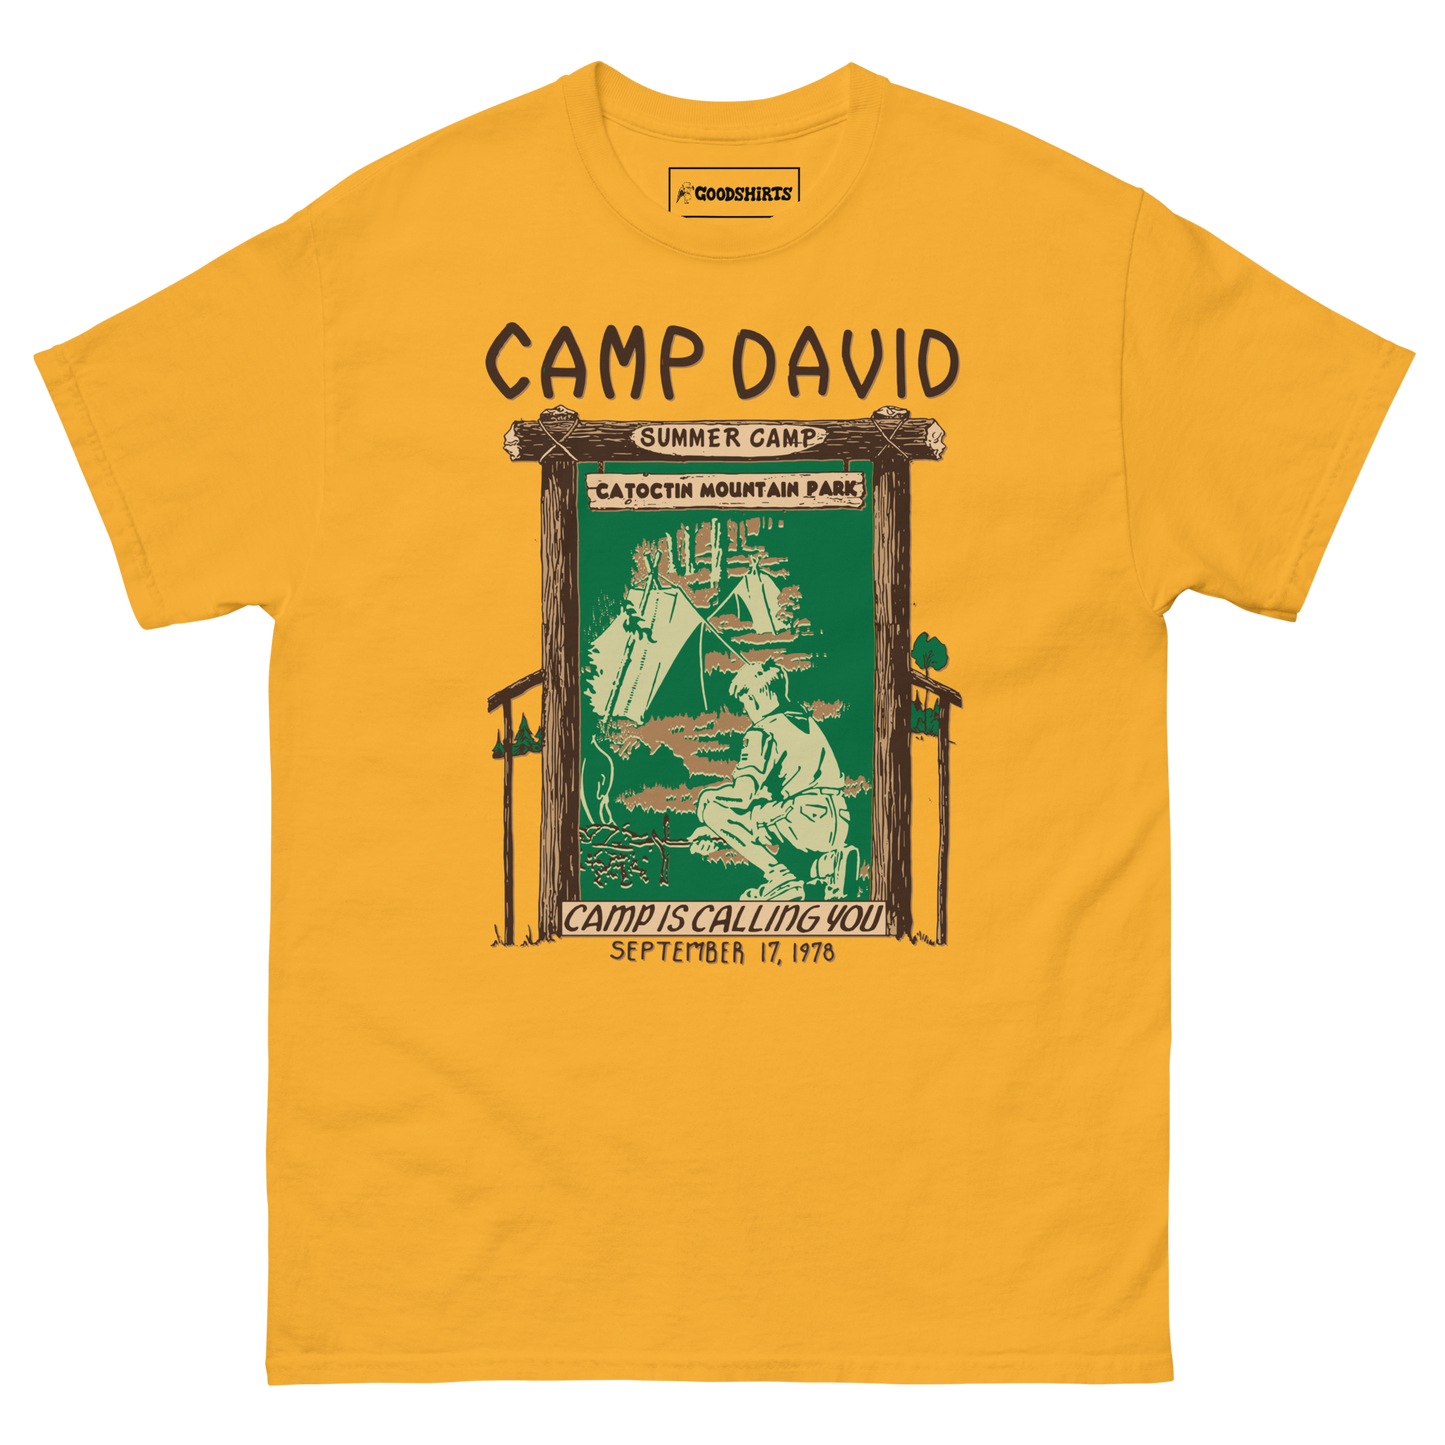 Camp David Summer Camp.